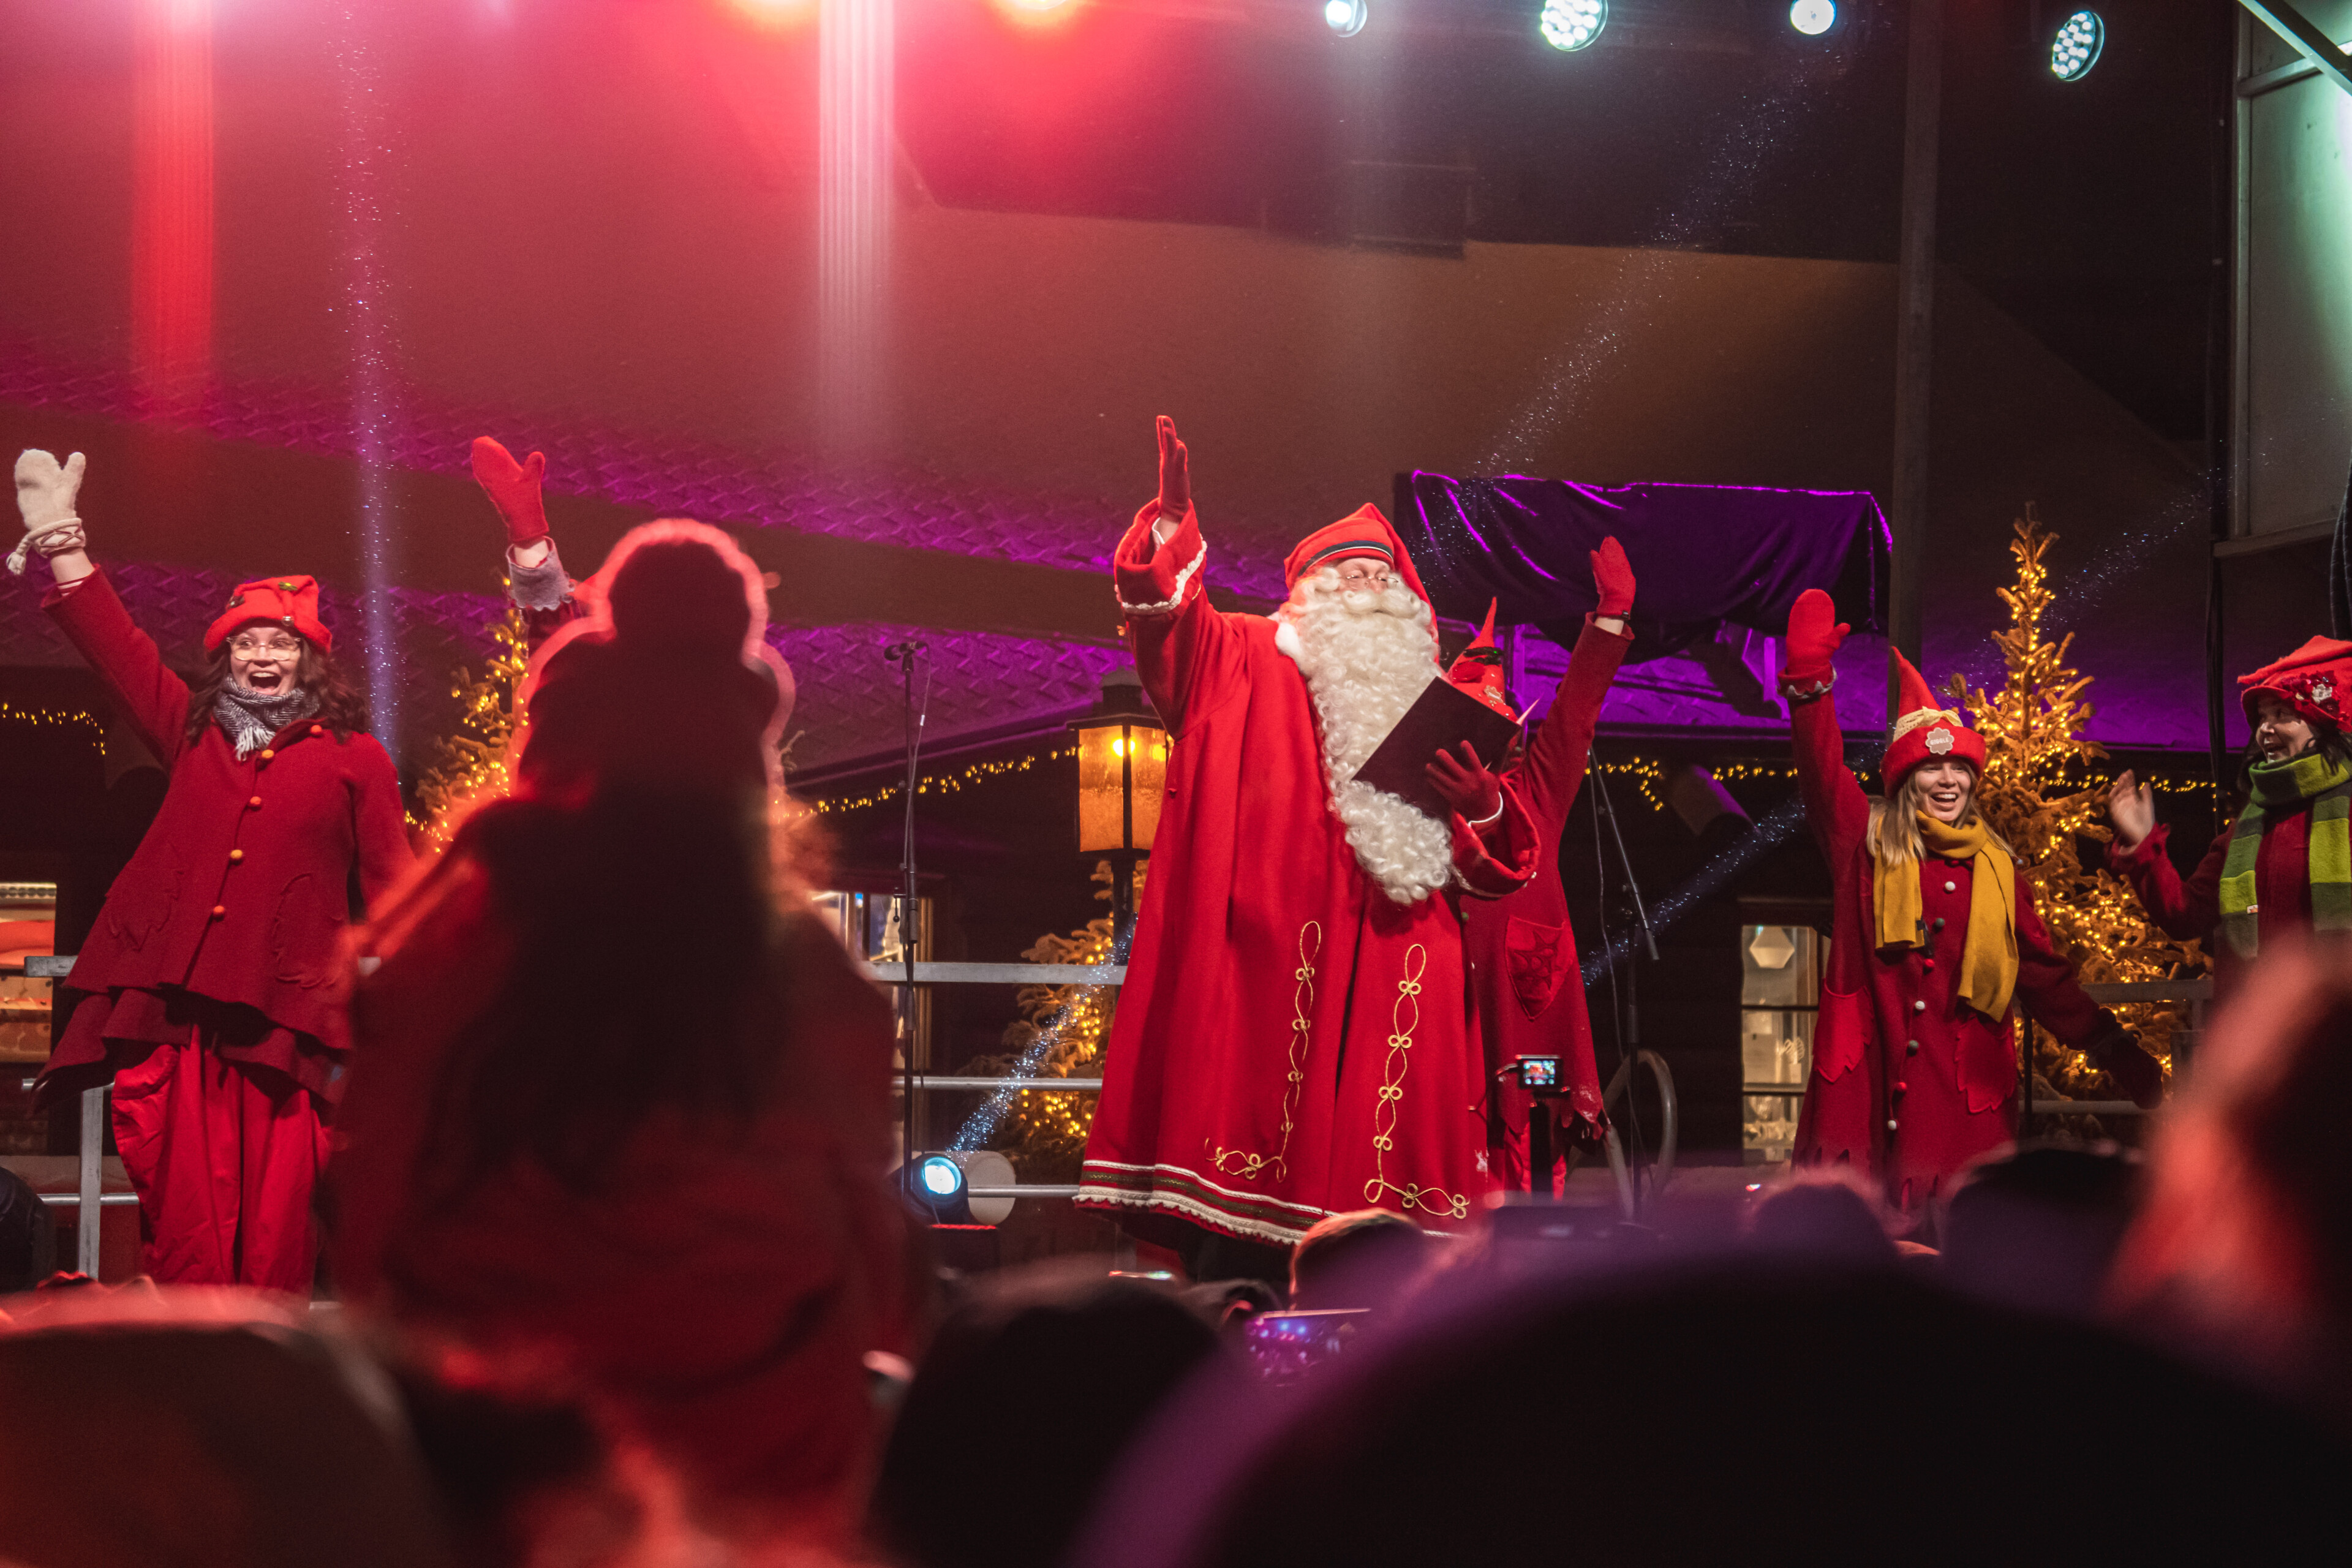 Santa Claus speaking in a Christmas event with elves in Santa Claus Village, Rovaniemi, Finland.